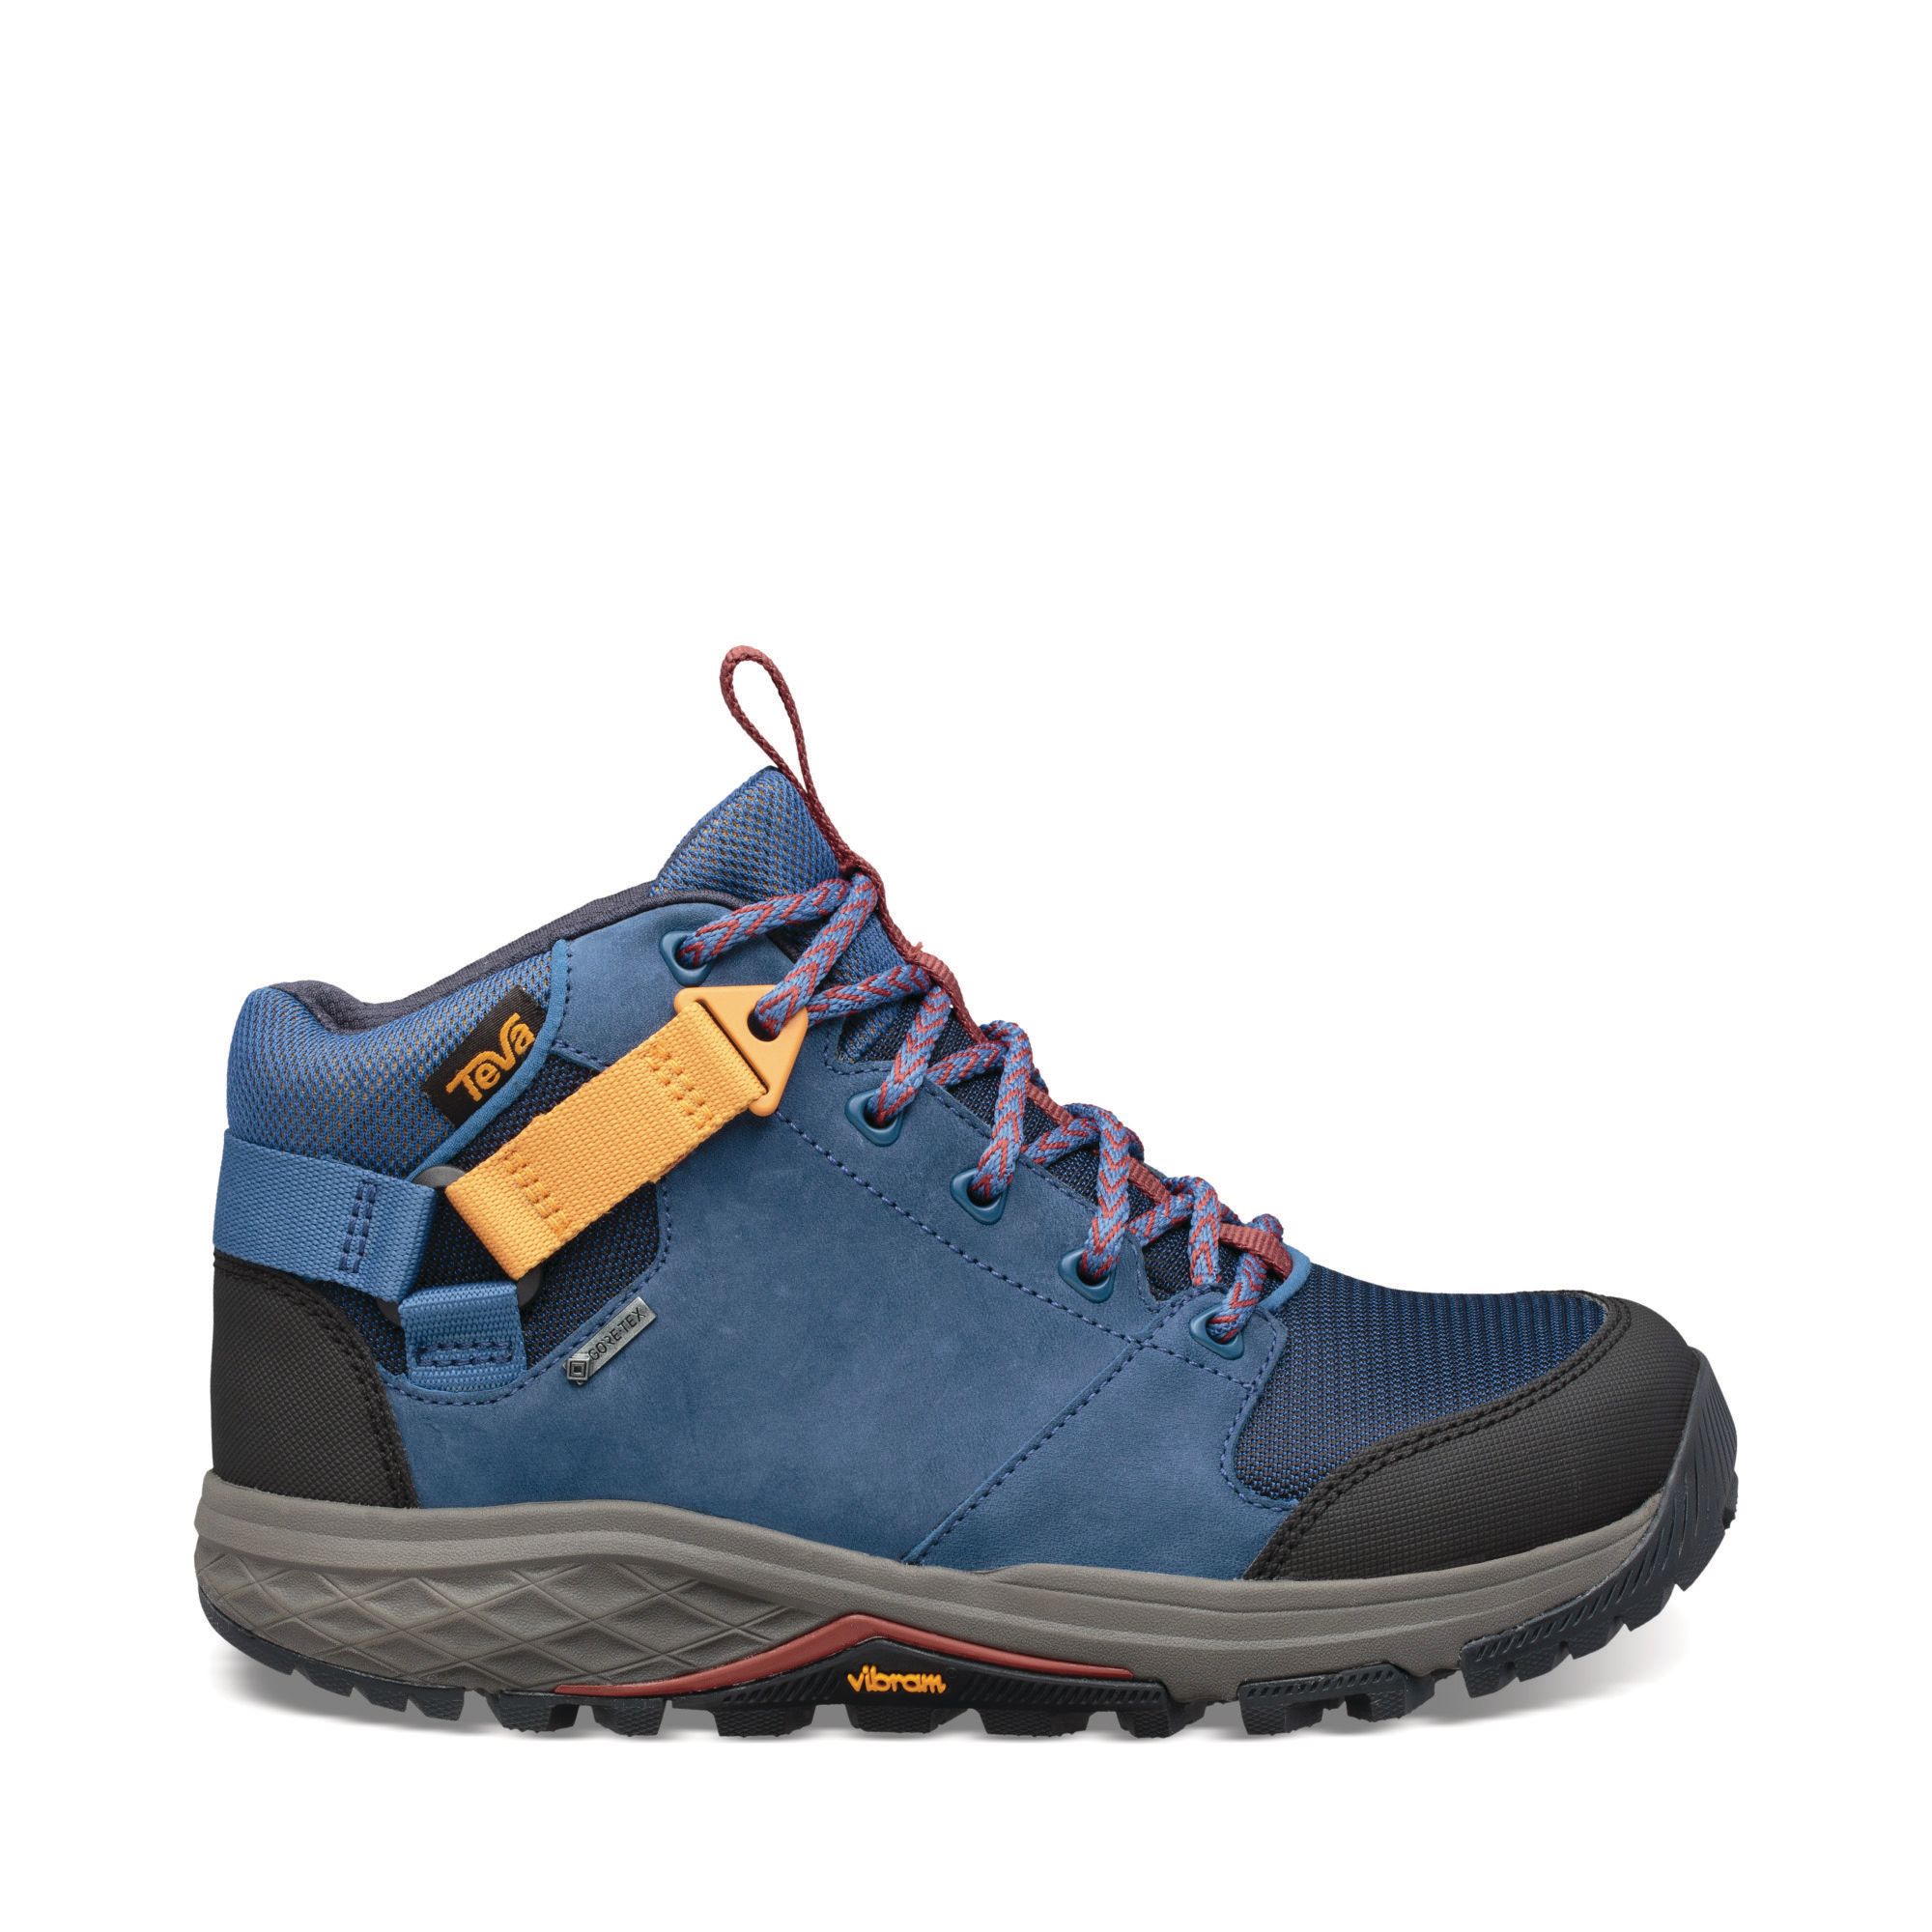 Image of Teva Women's Grandview GTX Hiking Boots